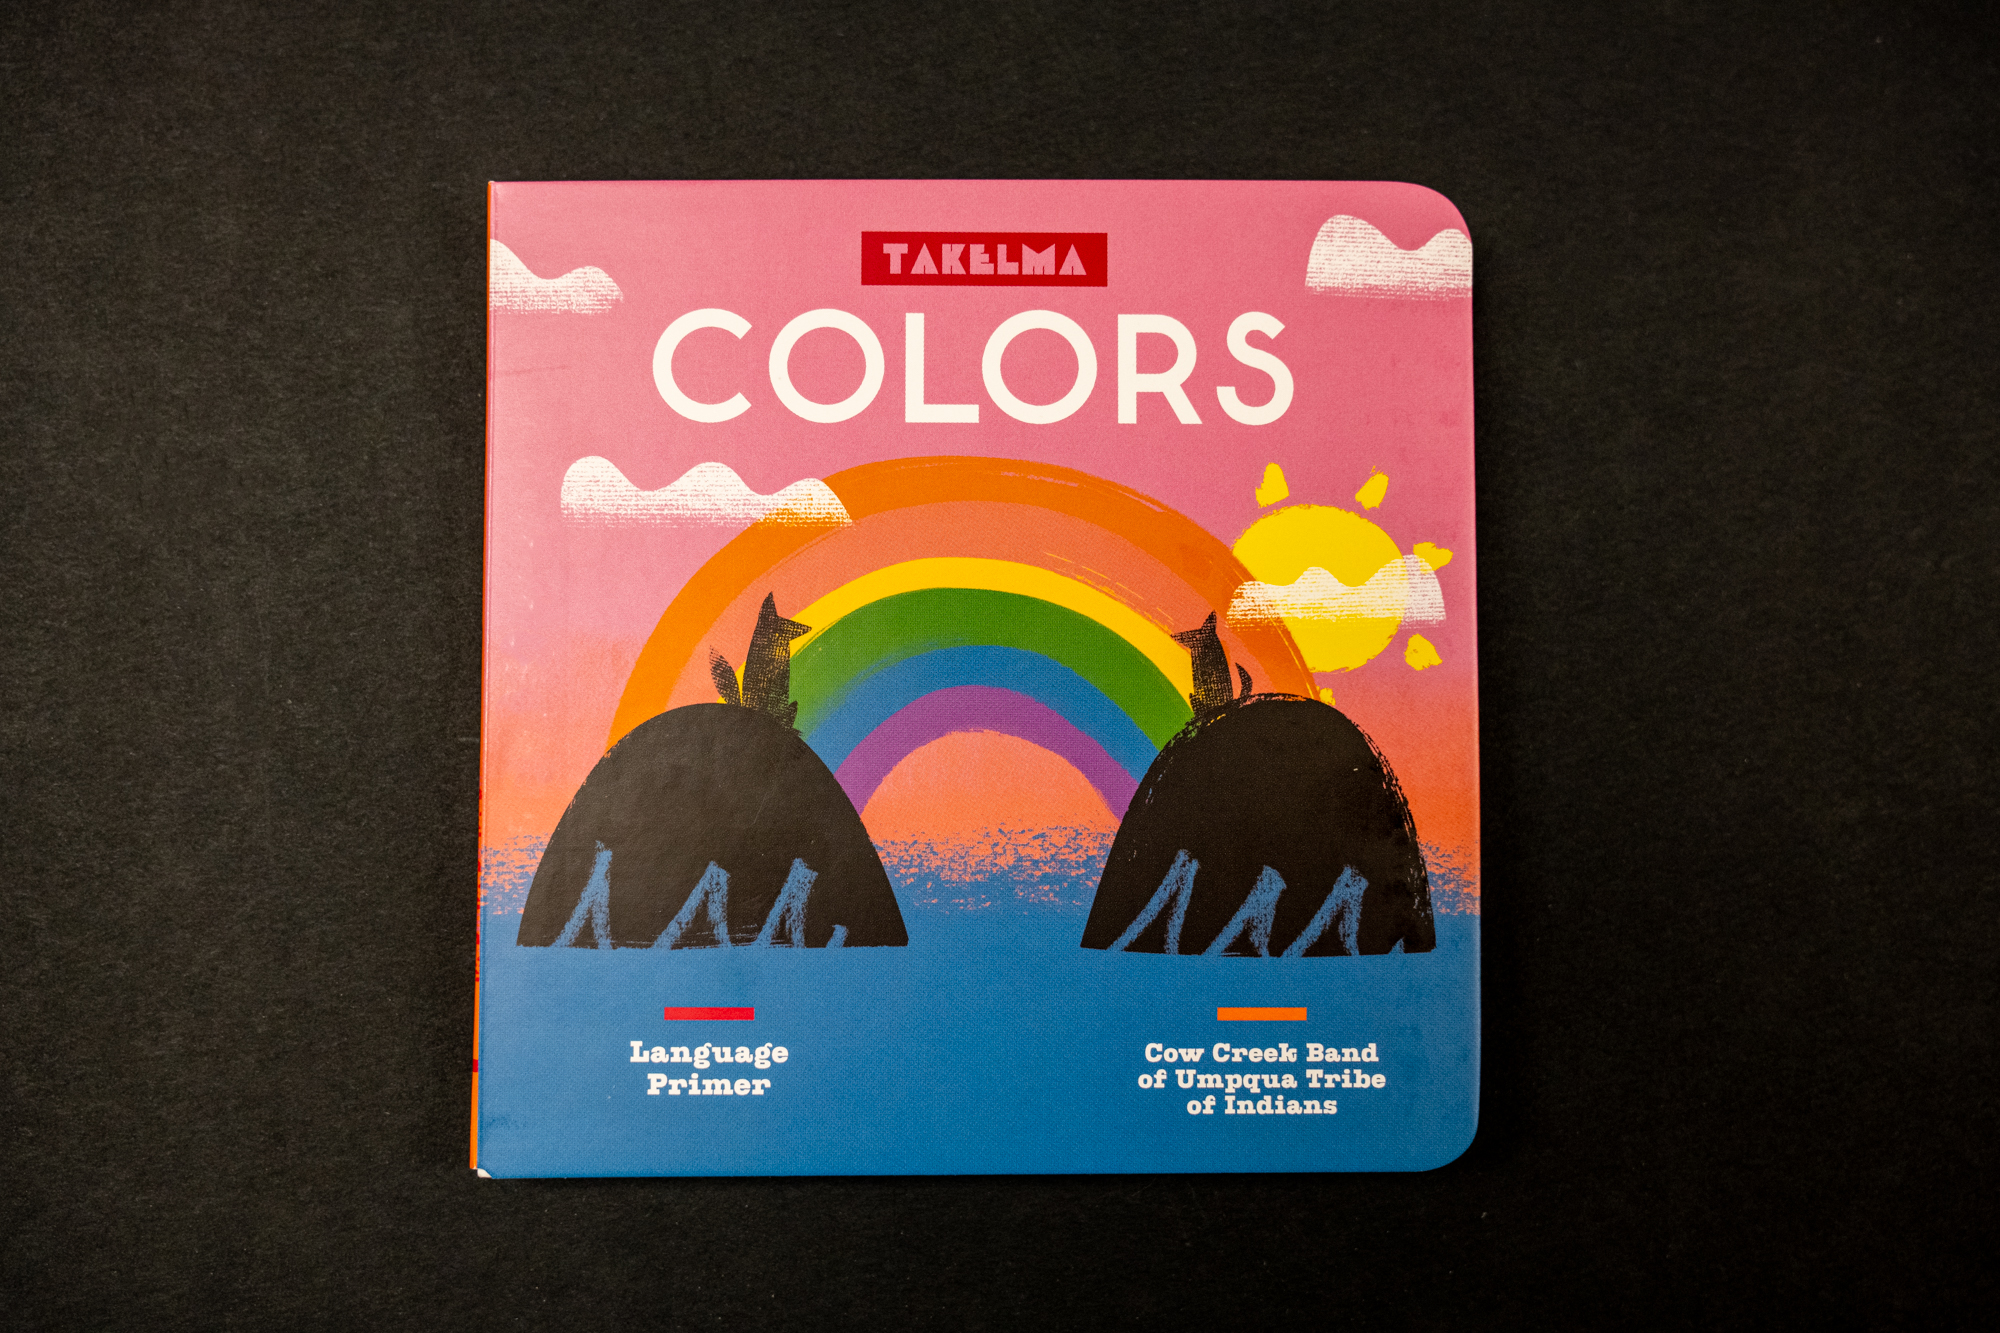 Takelma Picture Book - Colors